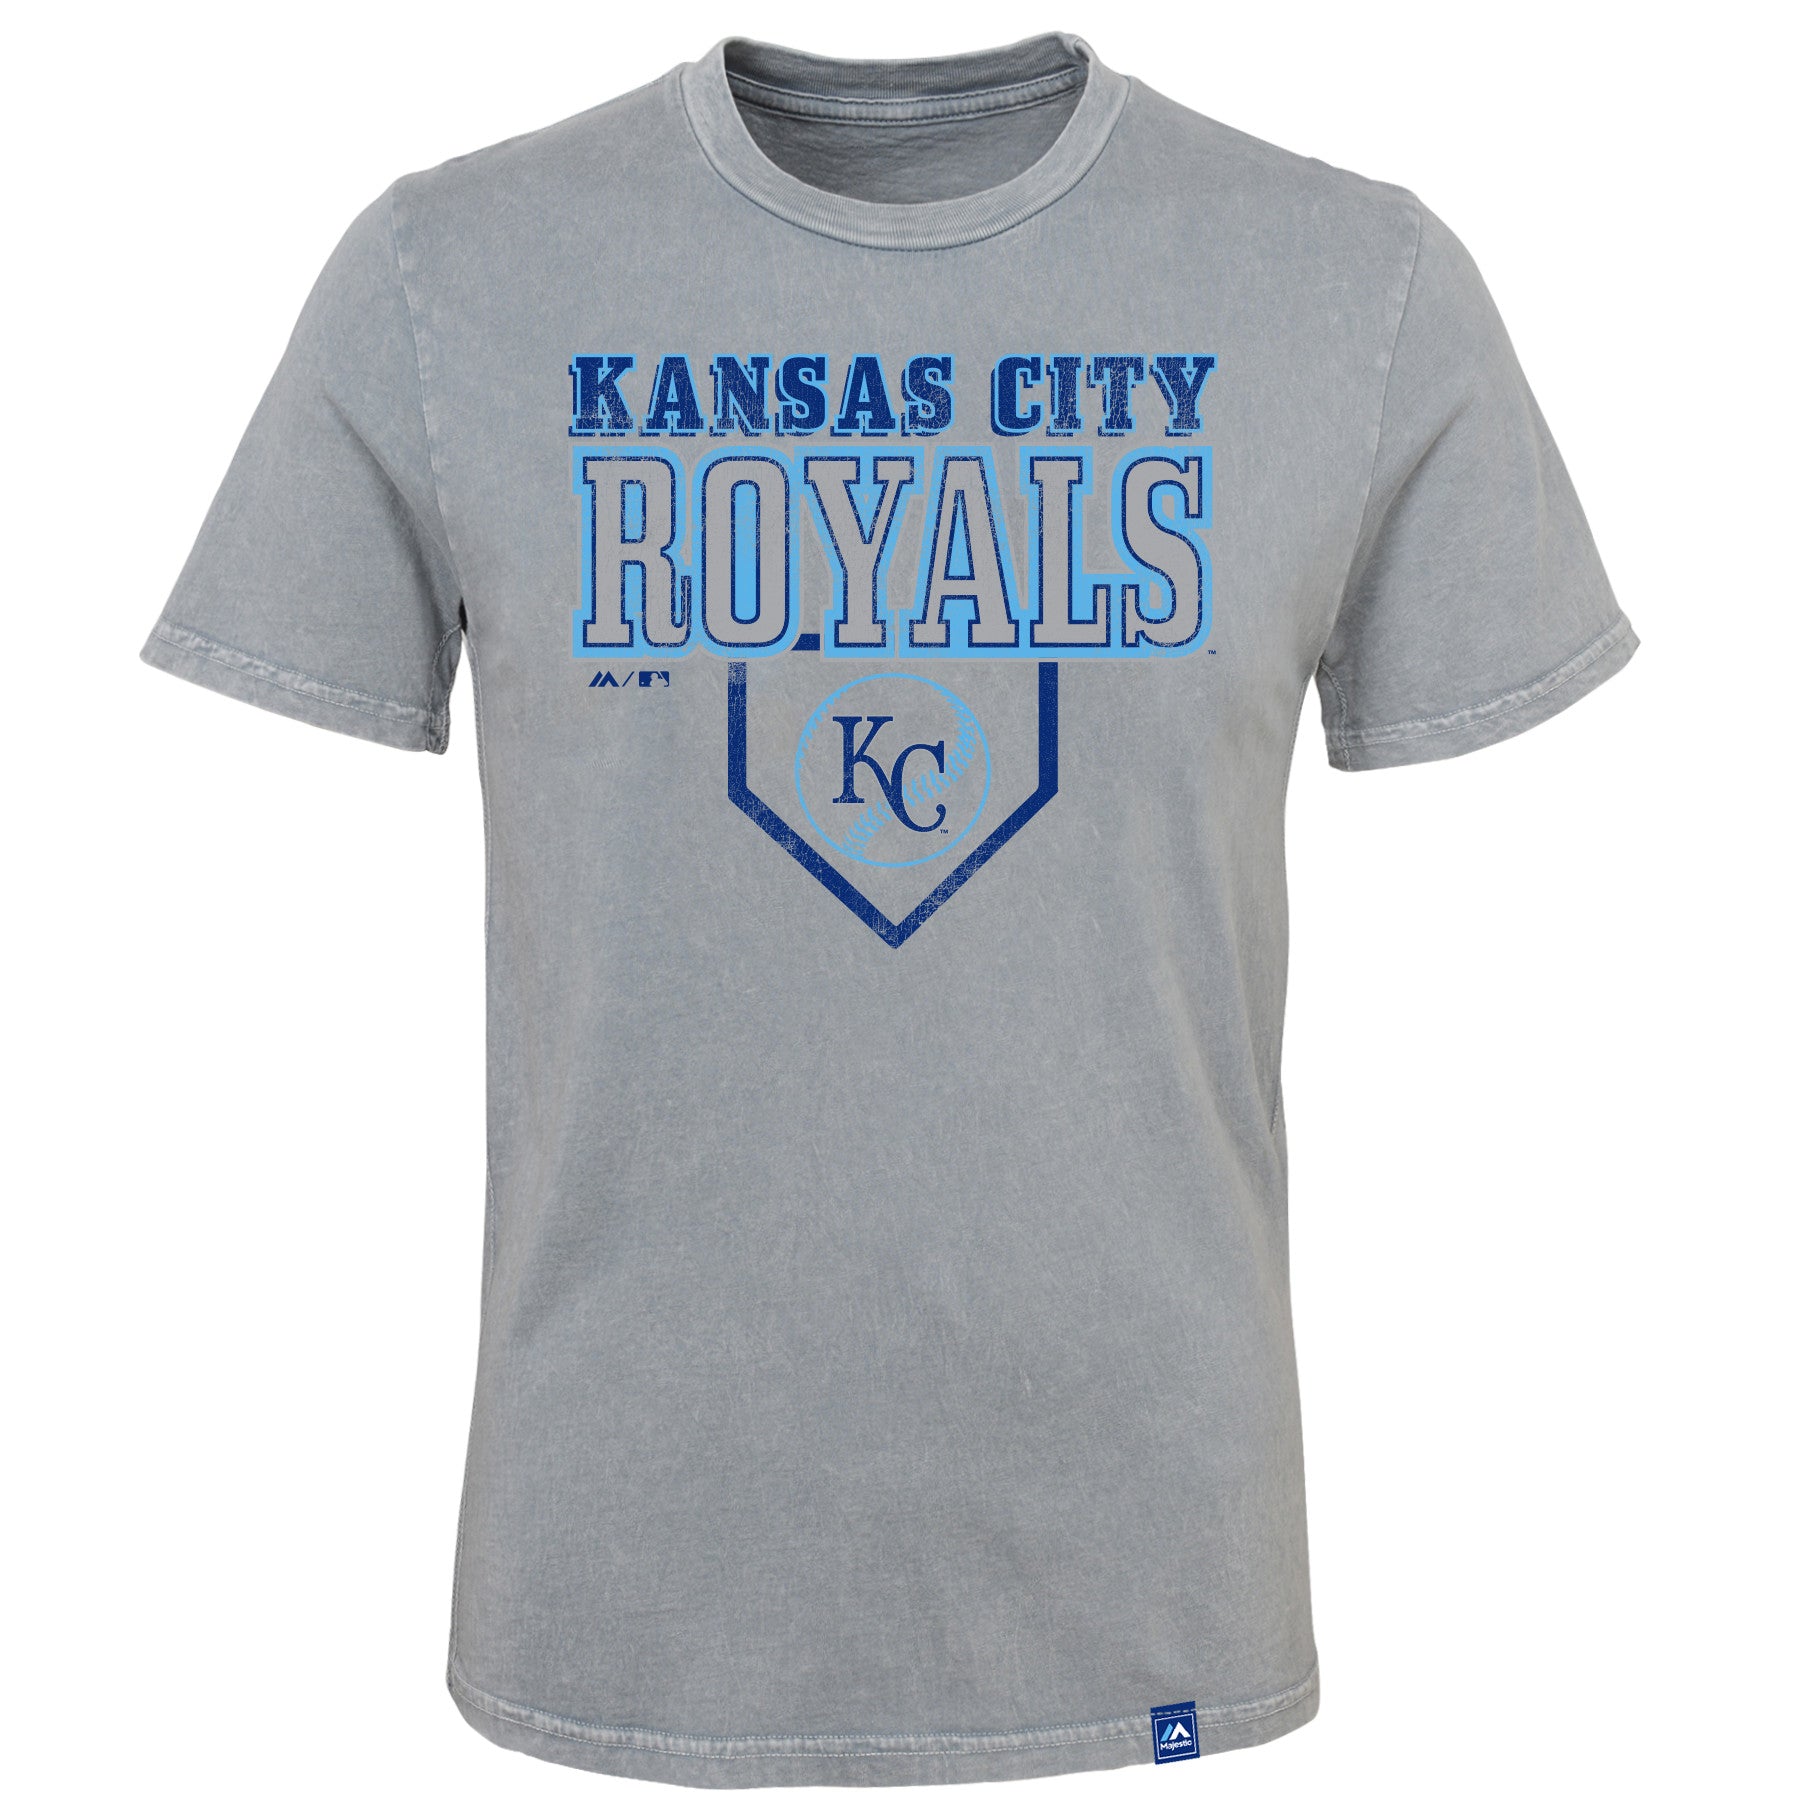 Kansas City Royals Youth Heirloom Mineral Wash T-Shirt by